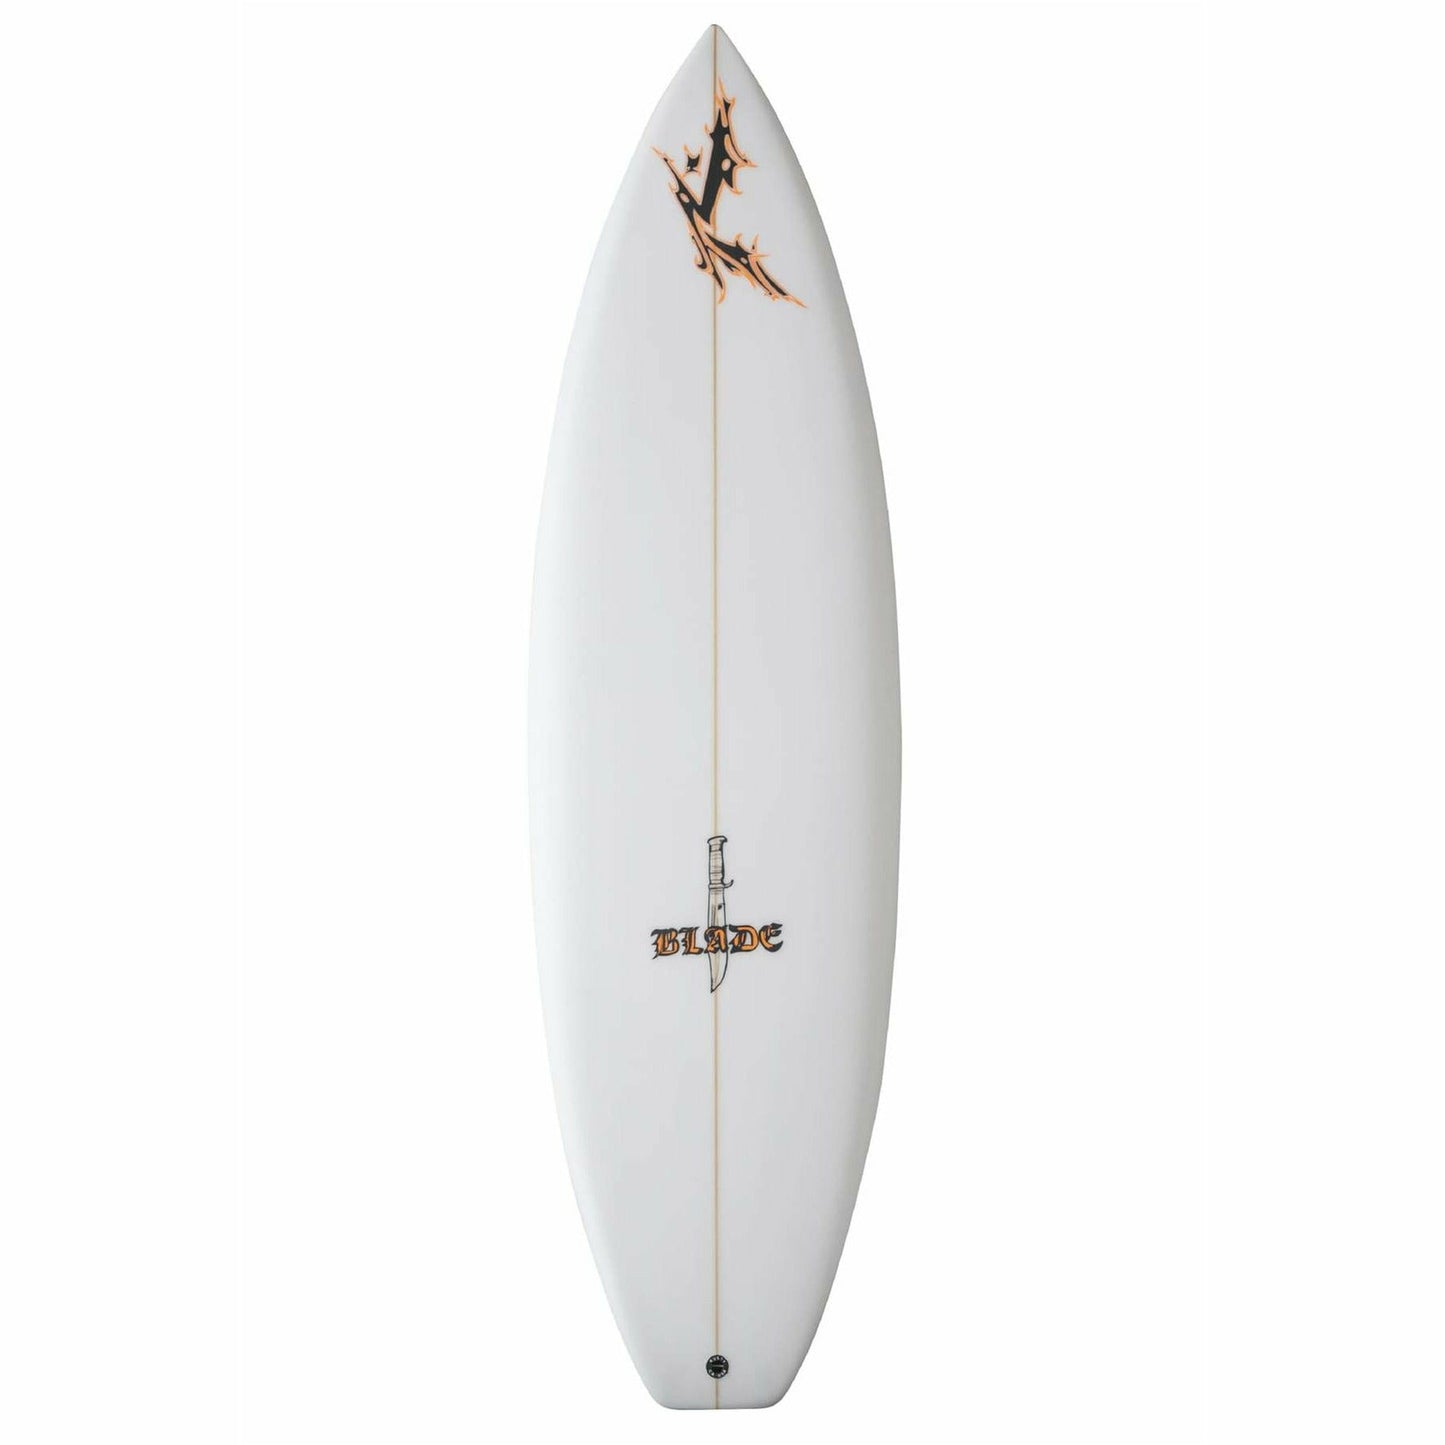 Rusty - The Blade Surfboard